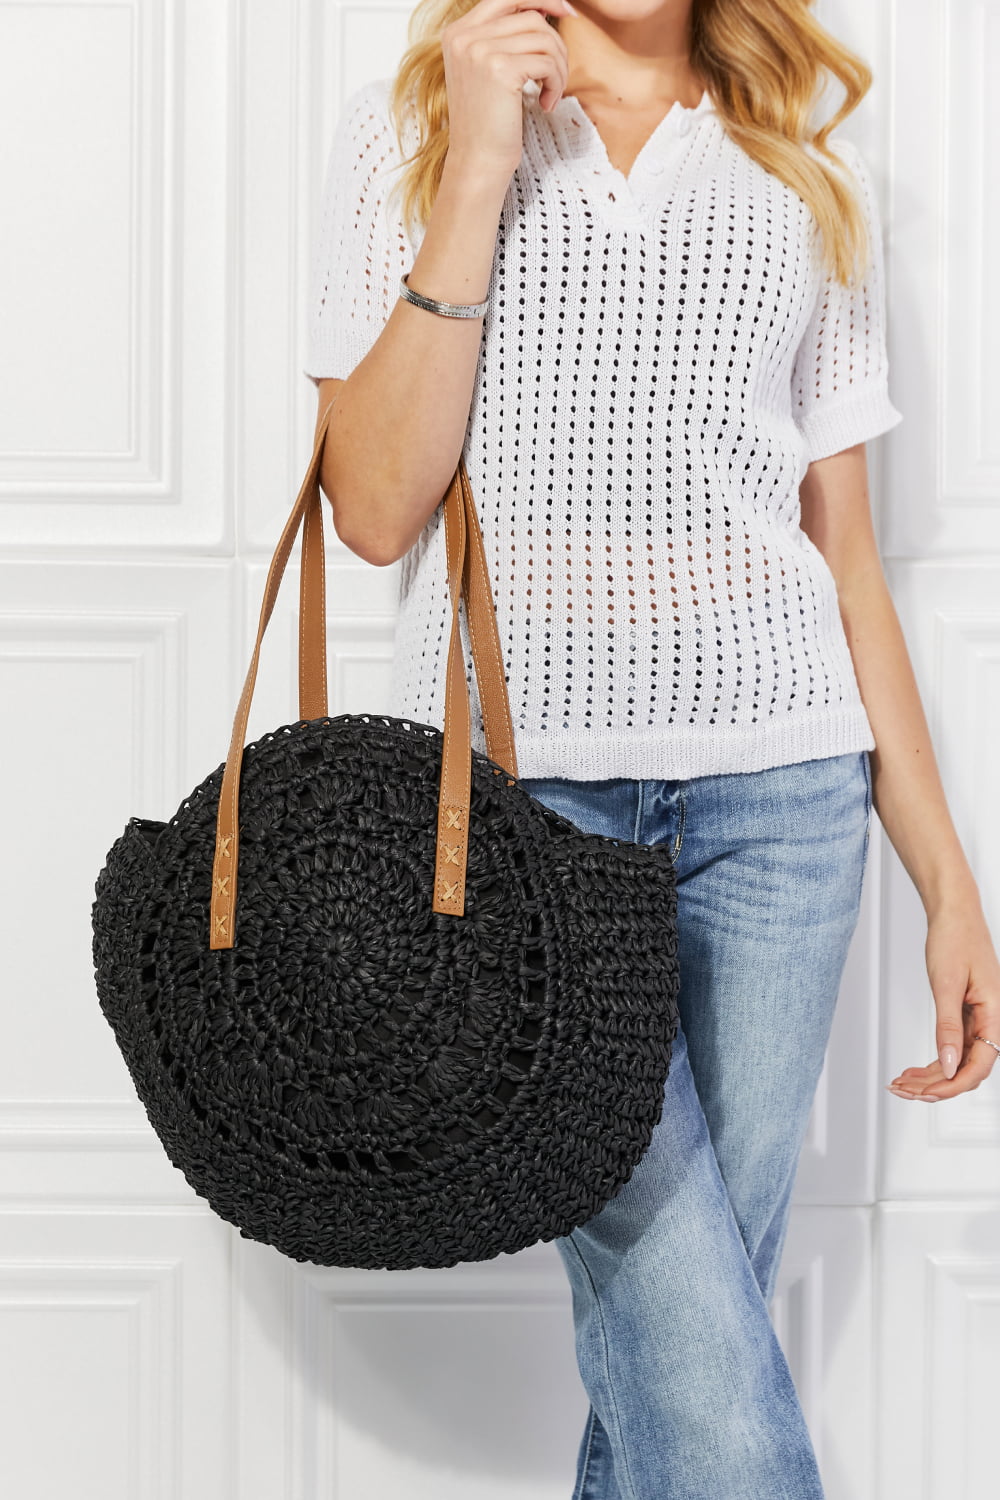 Justin Taylor C'est La Vie Crochet Handbag in Black free shipping -Oh Em Gee Boutique